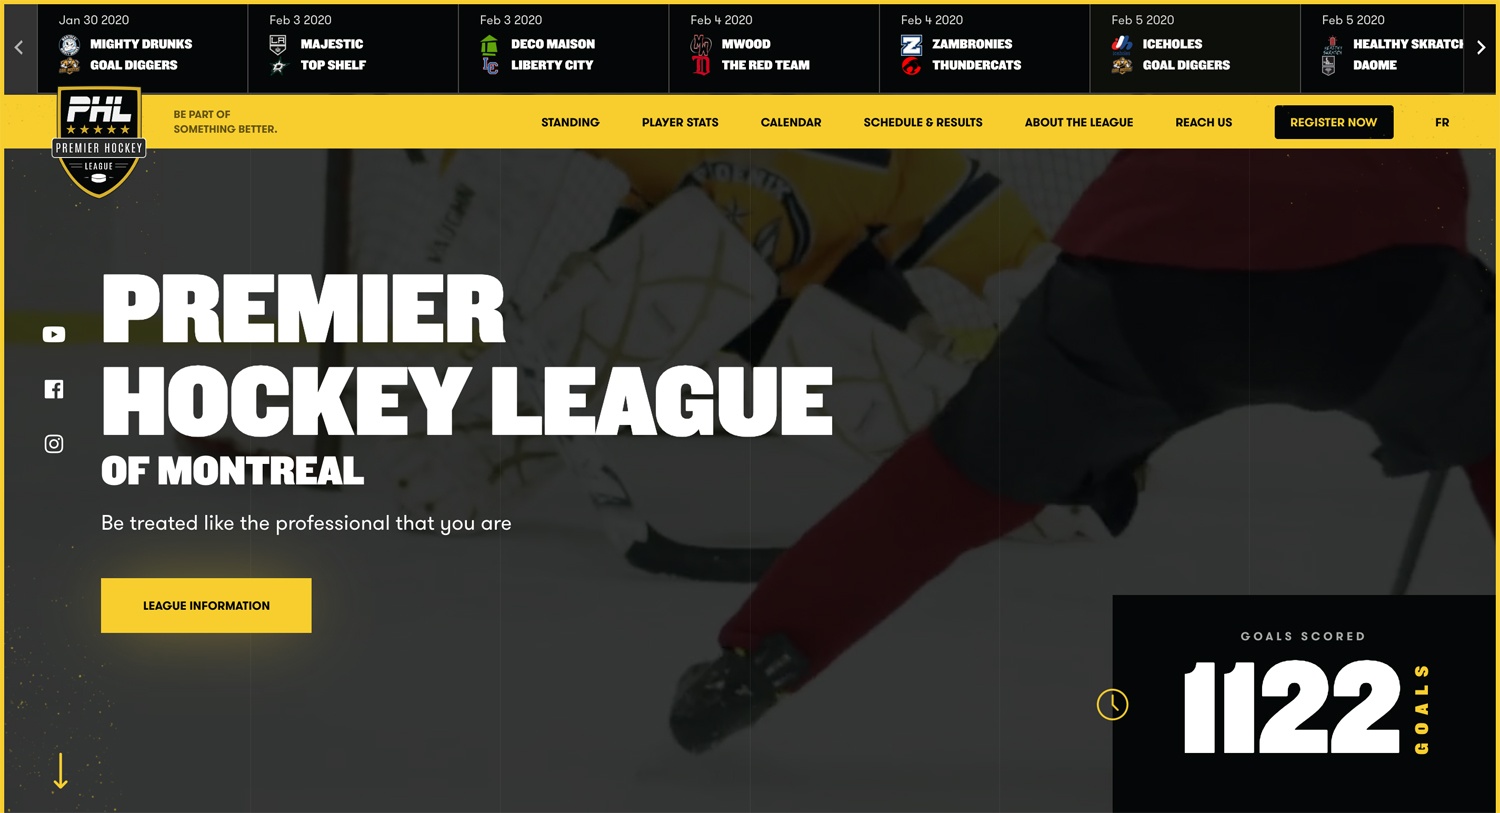 Premier Hockey League of Montreal